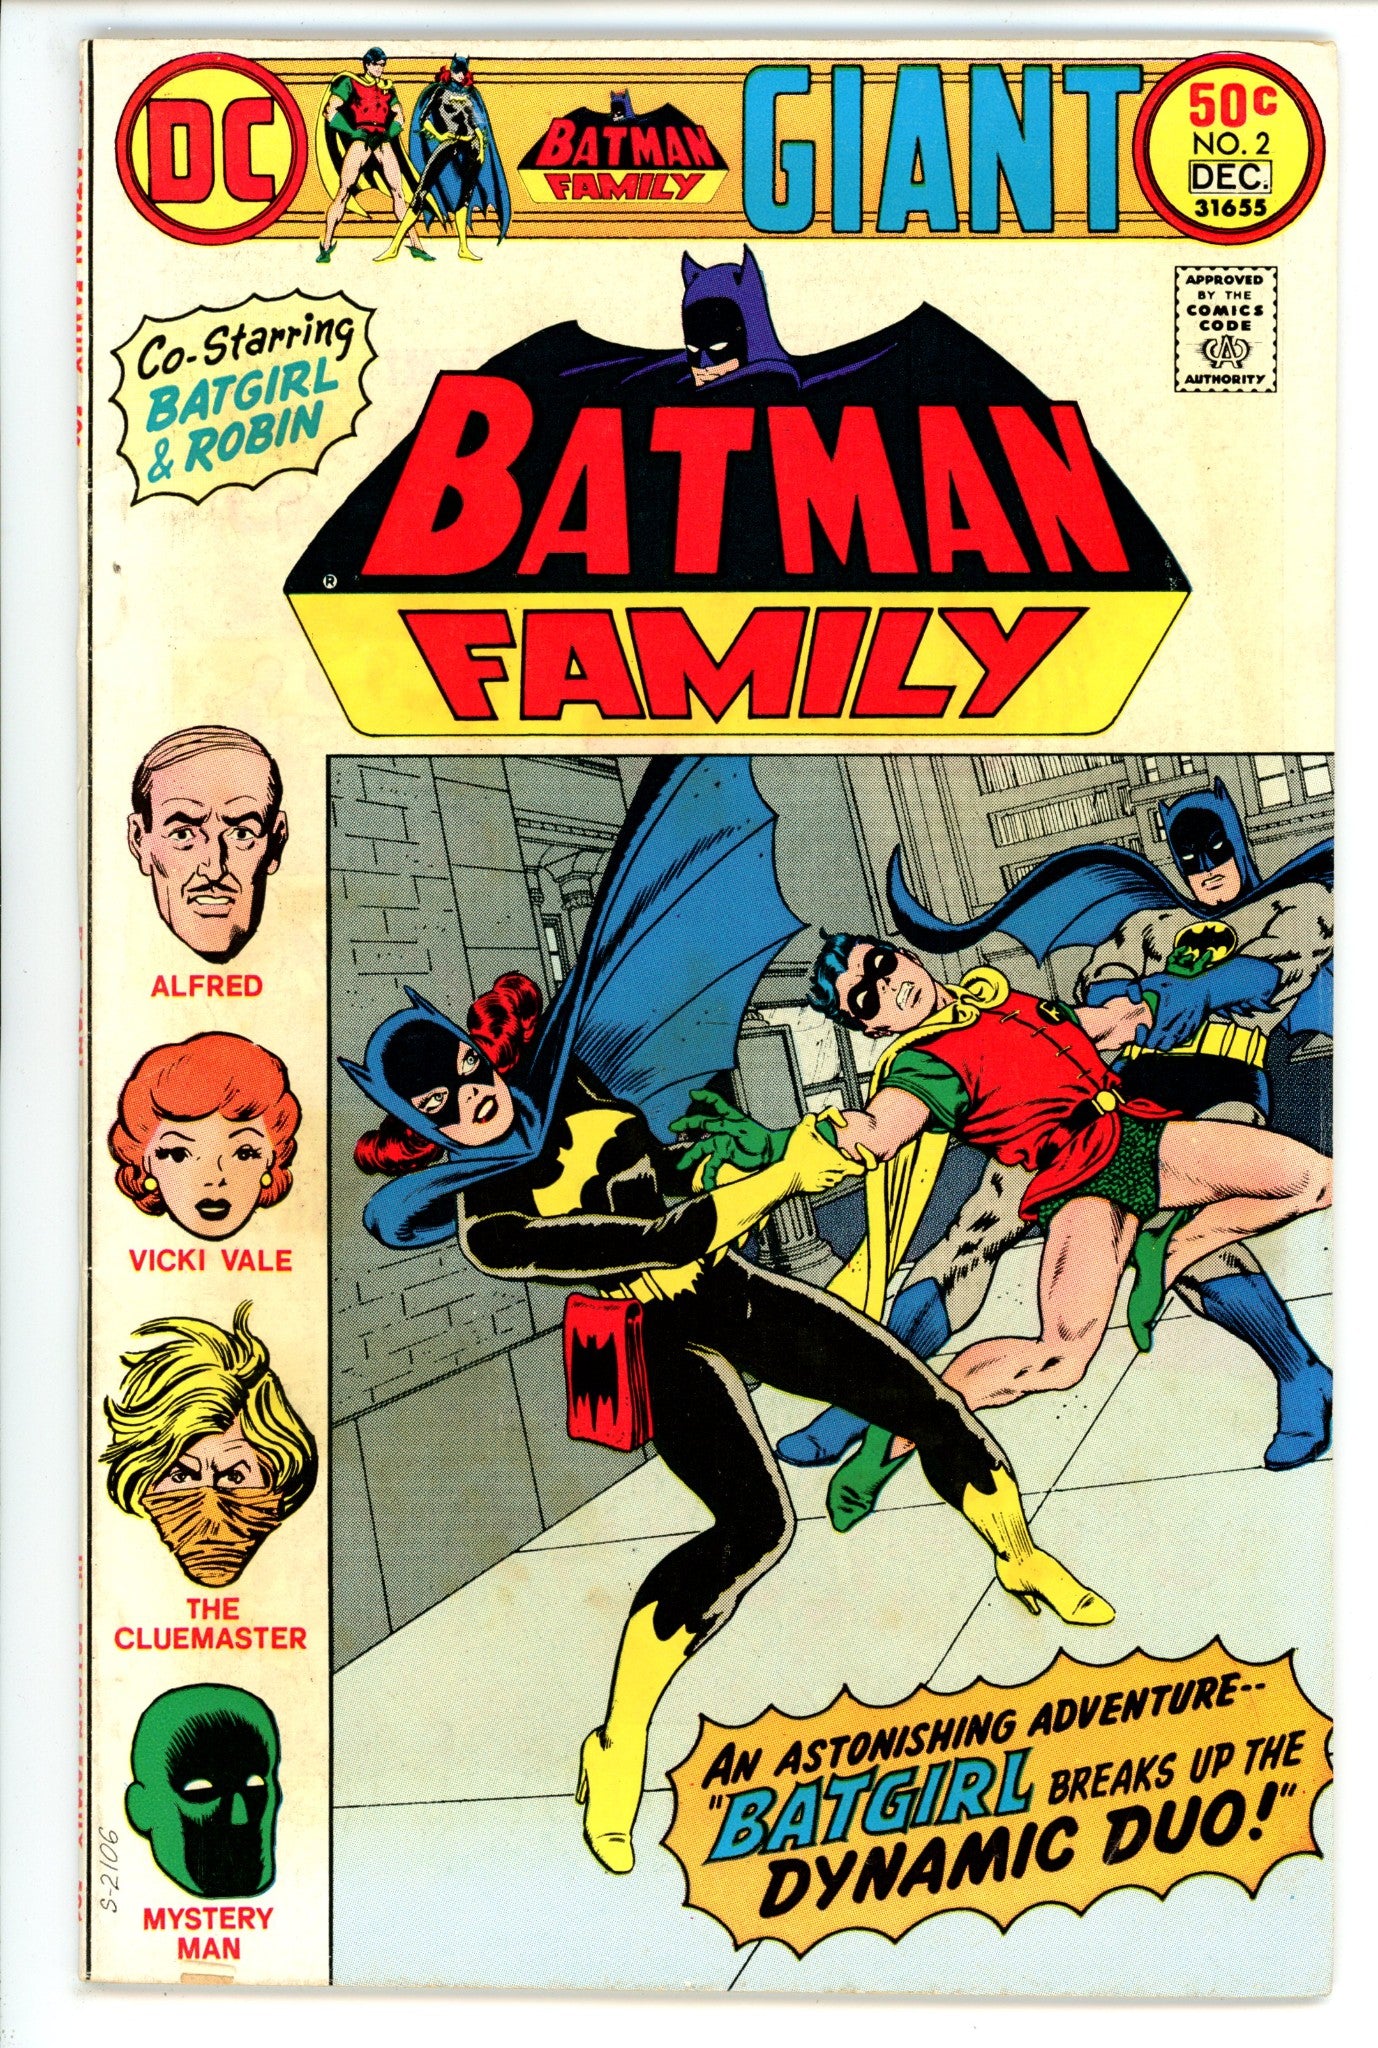 The Batman Family Vol 1 2 FN (6.0) (1975) 